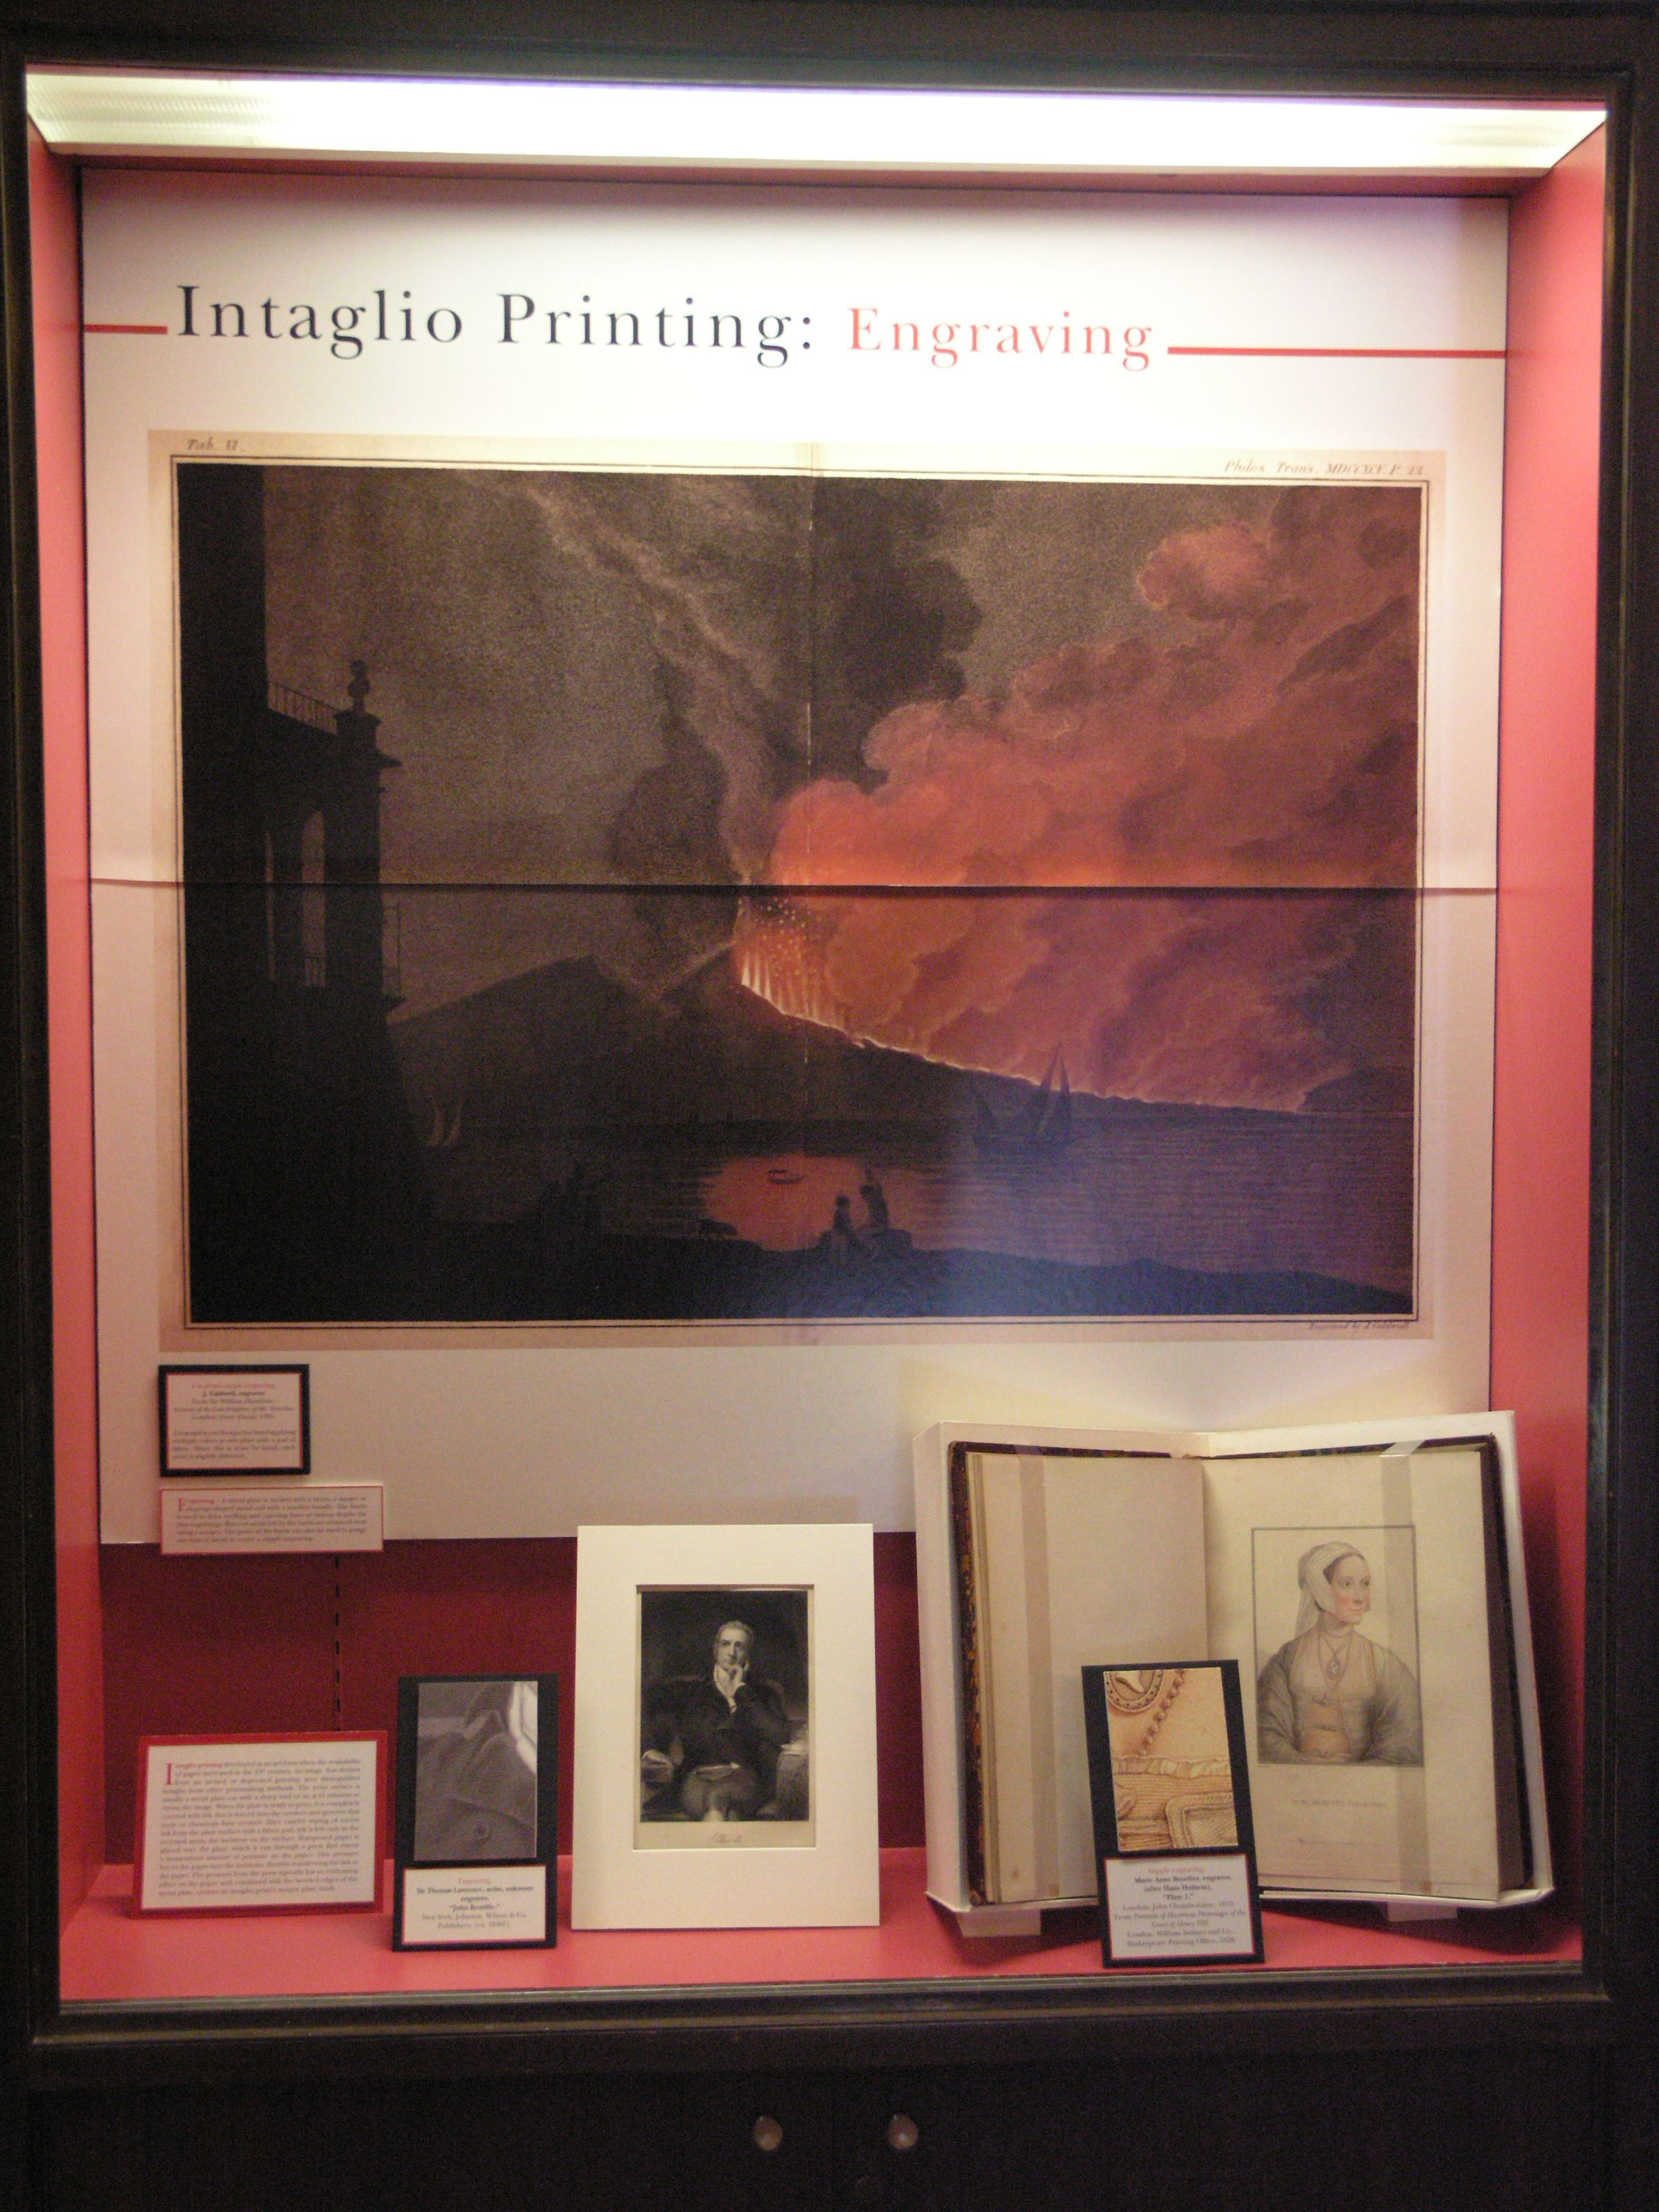 Case 4 - Intaglio Printing: Engraving